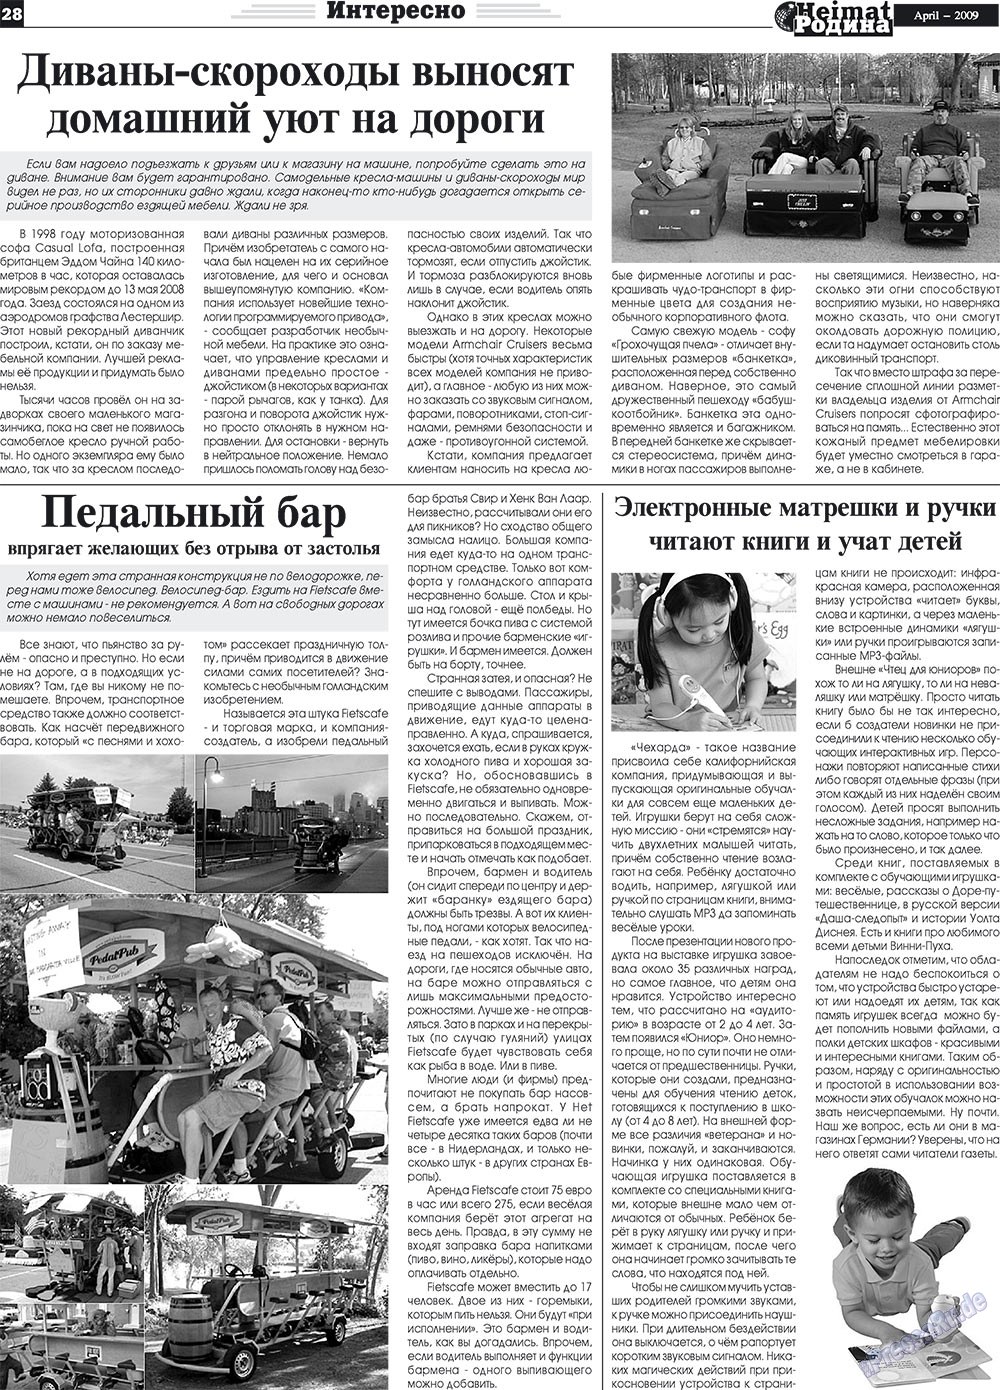 Heimat-Родина, газета. 2009 №4 стр.28